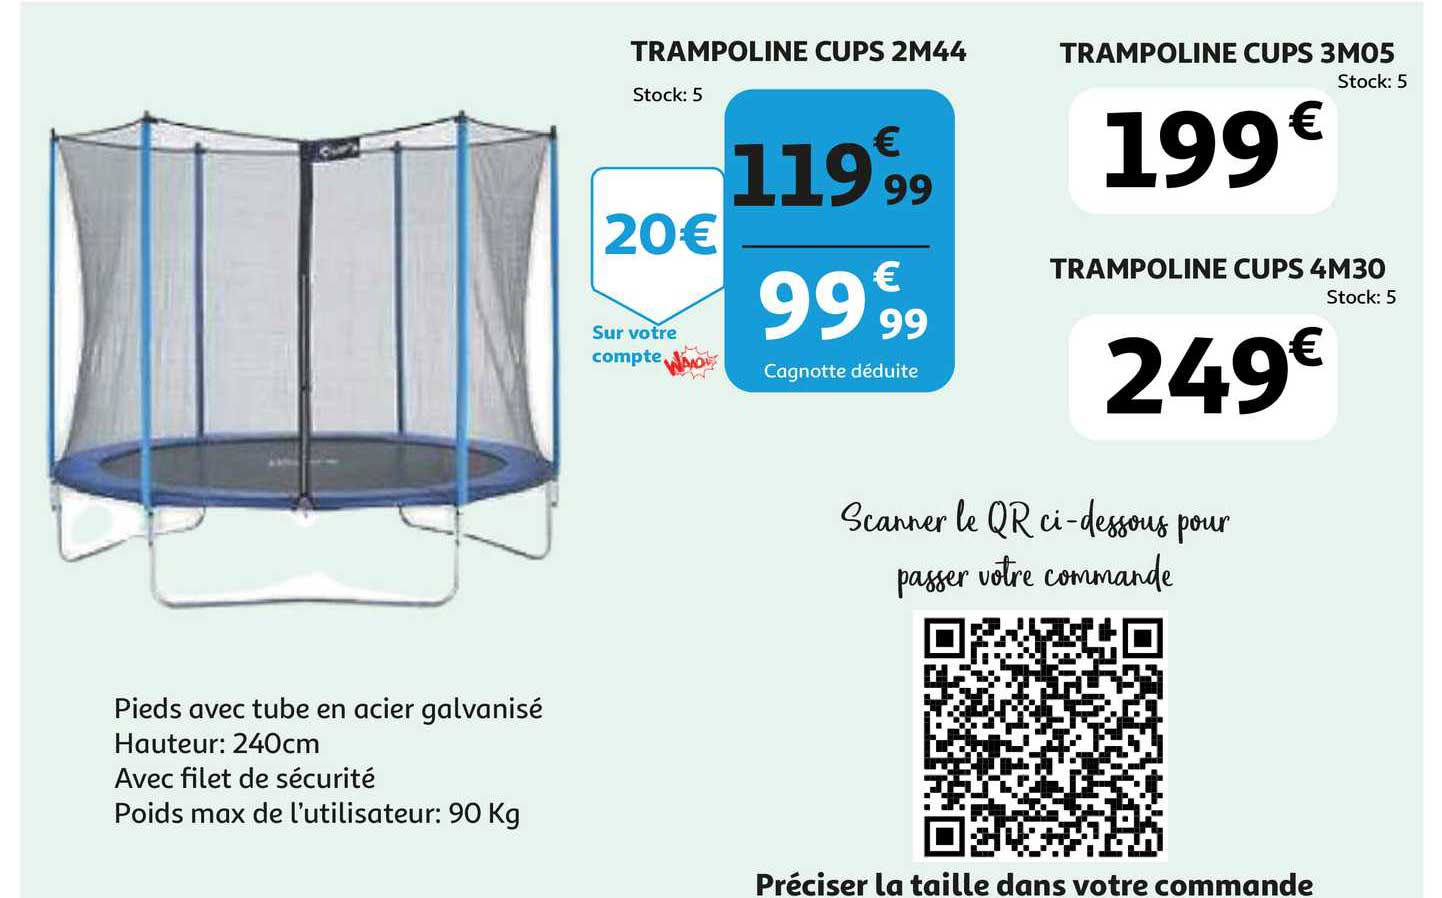 Auchan Direct Trampoline Cups 2m44, Trampoline Cups 3m05, Trampoline Cups 4m30